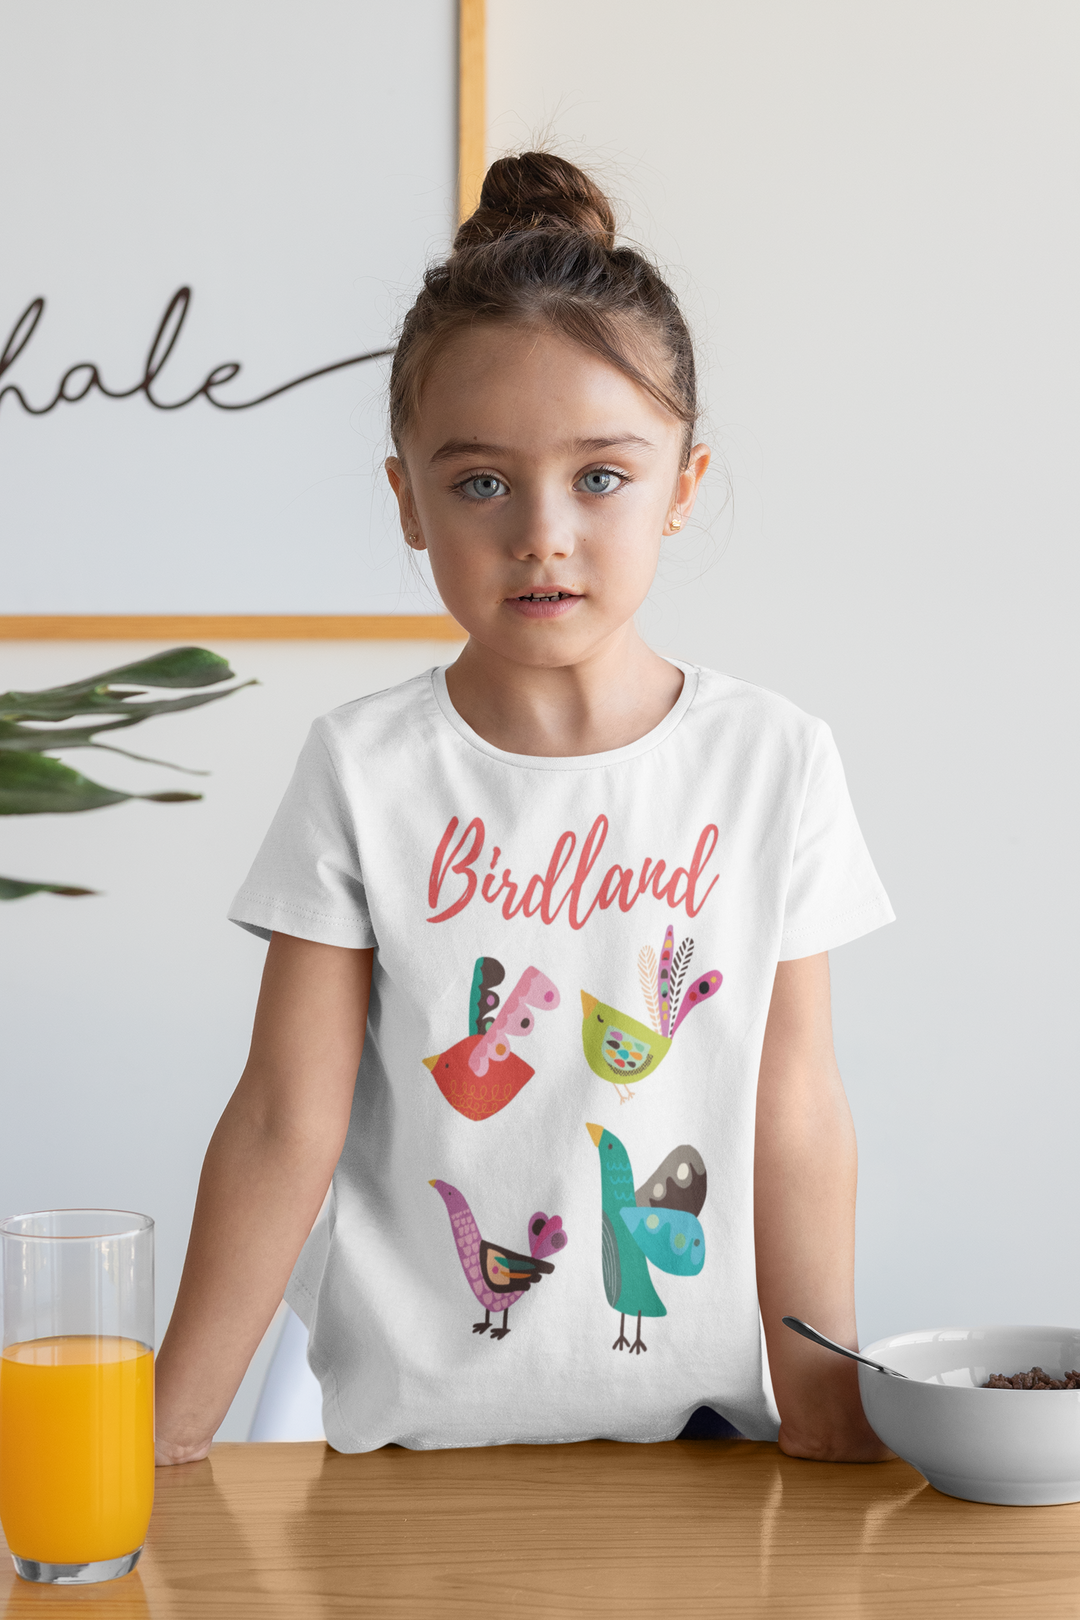 BIrdland II. Jazz Music | Graphic tee | Toddler Kids | Shirt | Country music | Soul | Kids